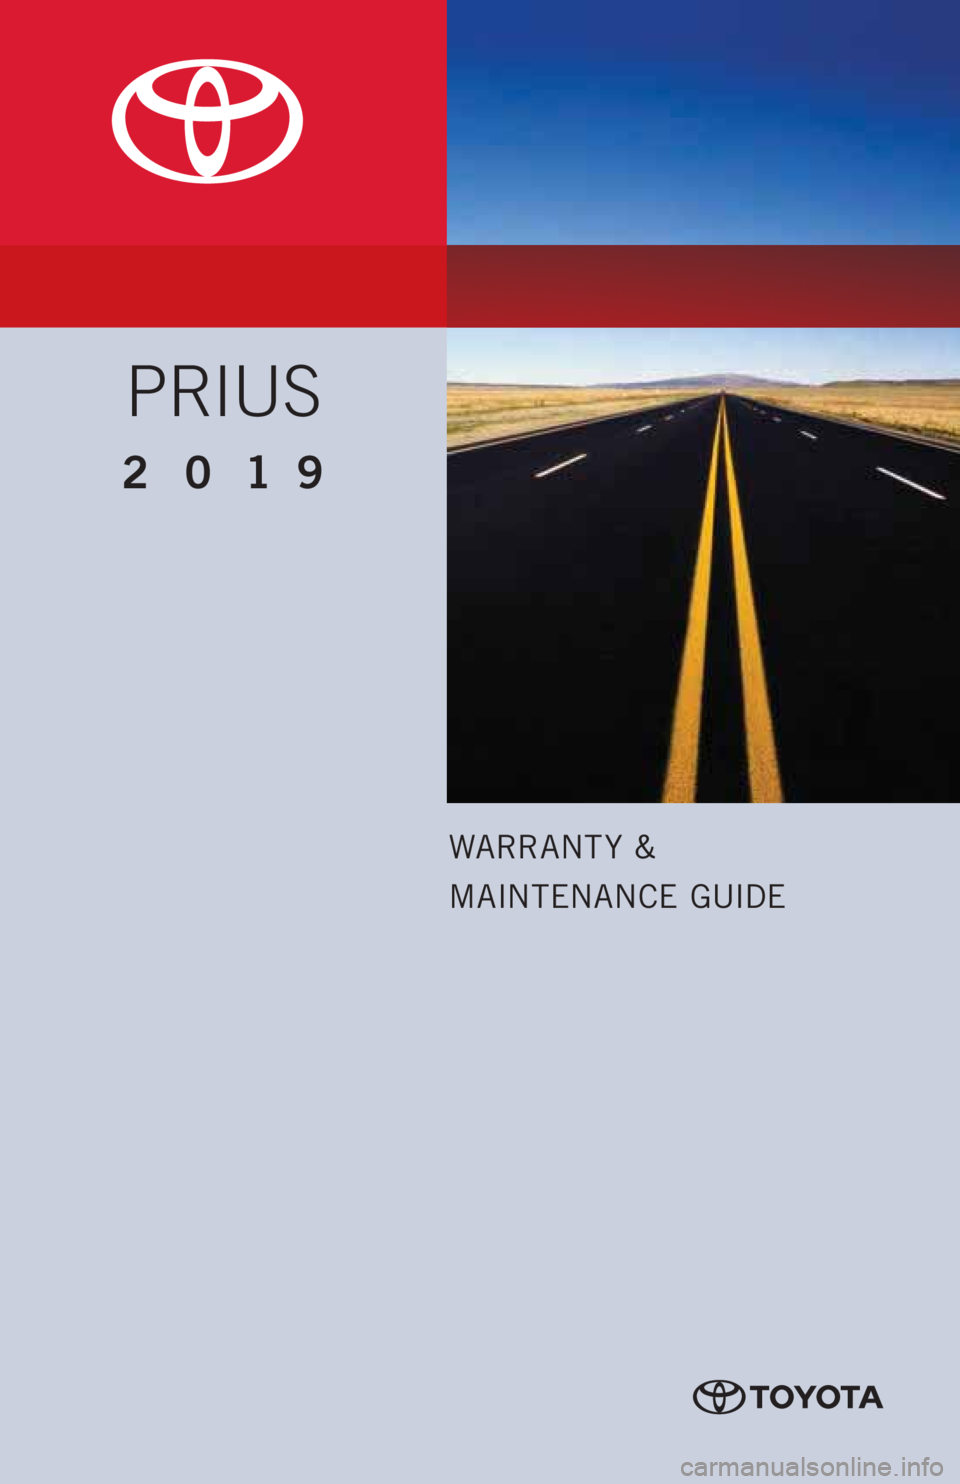 TOYOTA PRIUS 2019  Warranties & Maintenance Guides (in English) WARRANT Y &
MAINTENANCE GUIDE
PRIUS
2019      